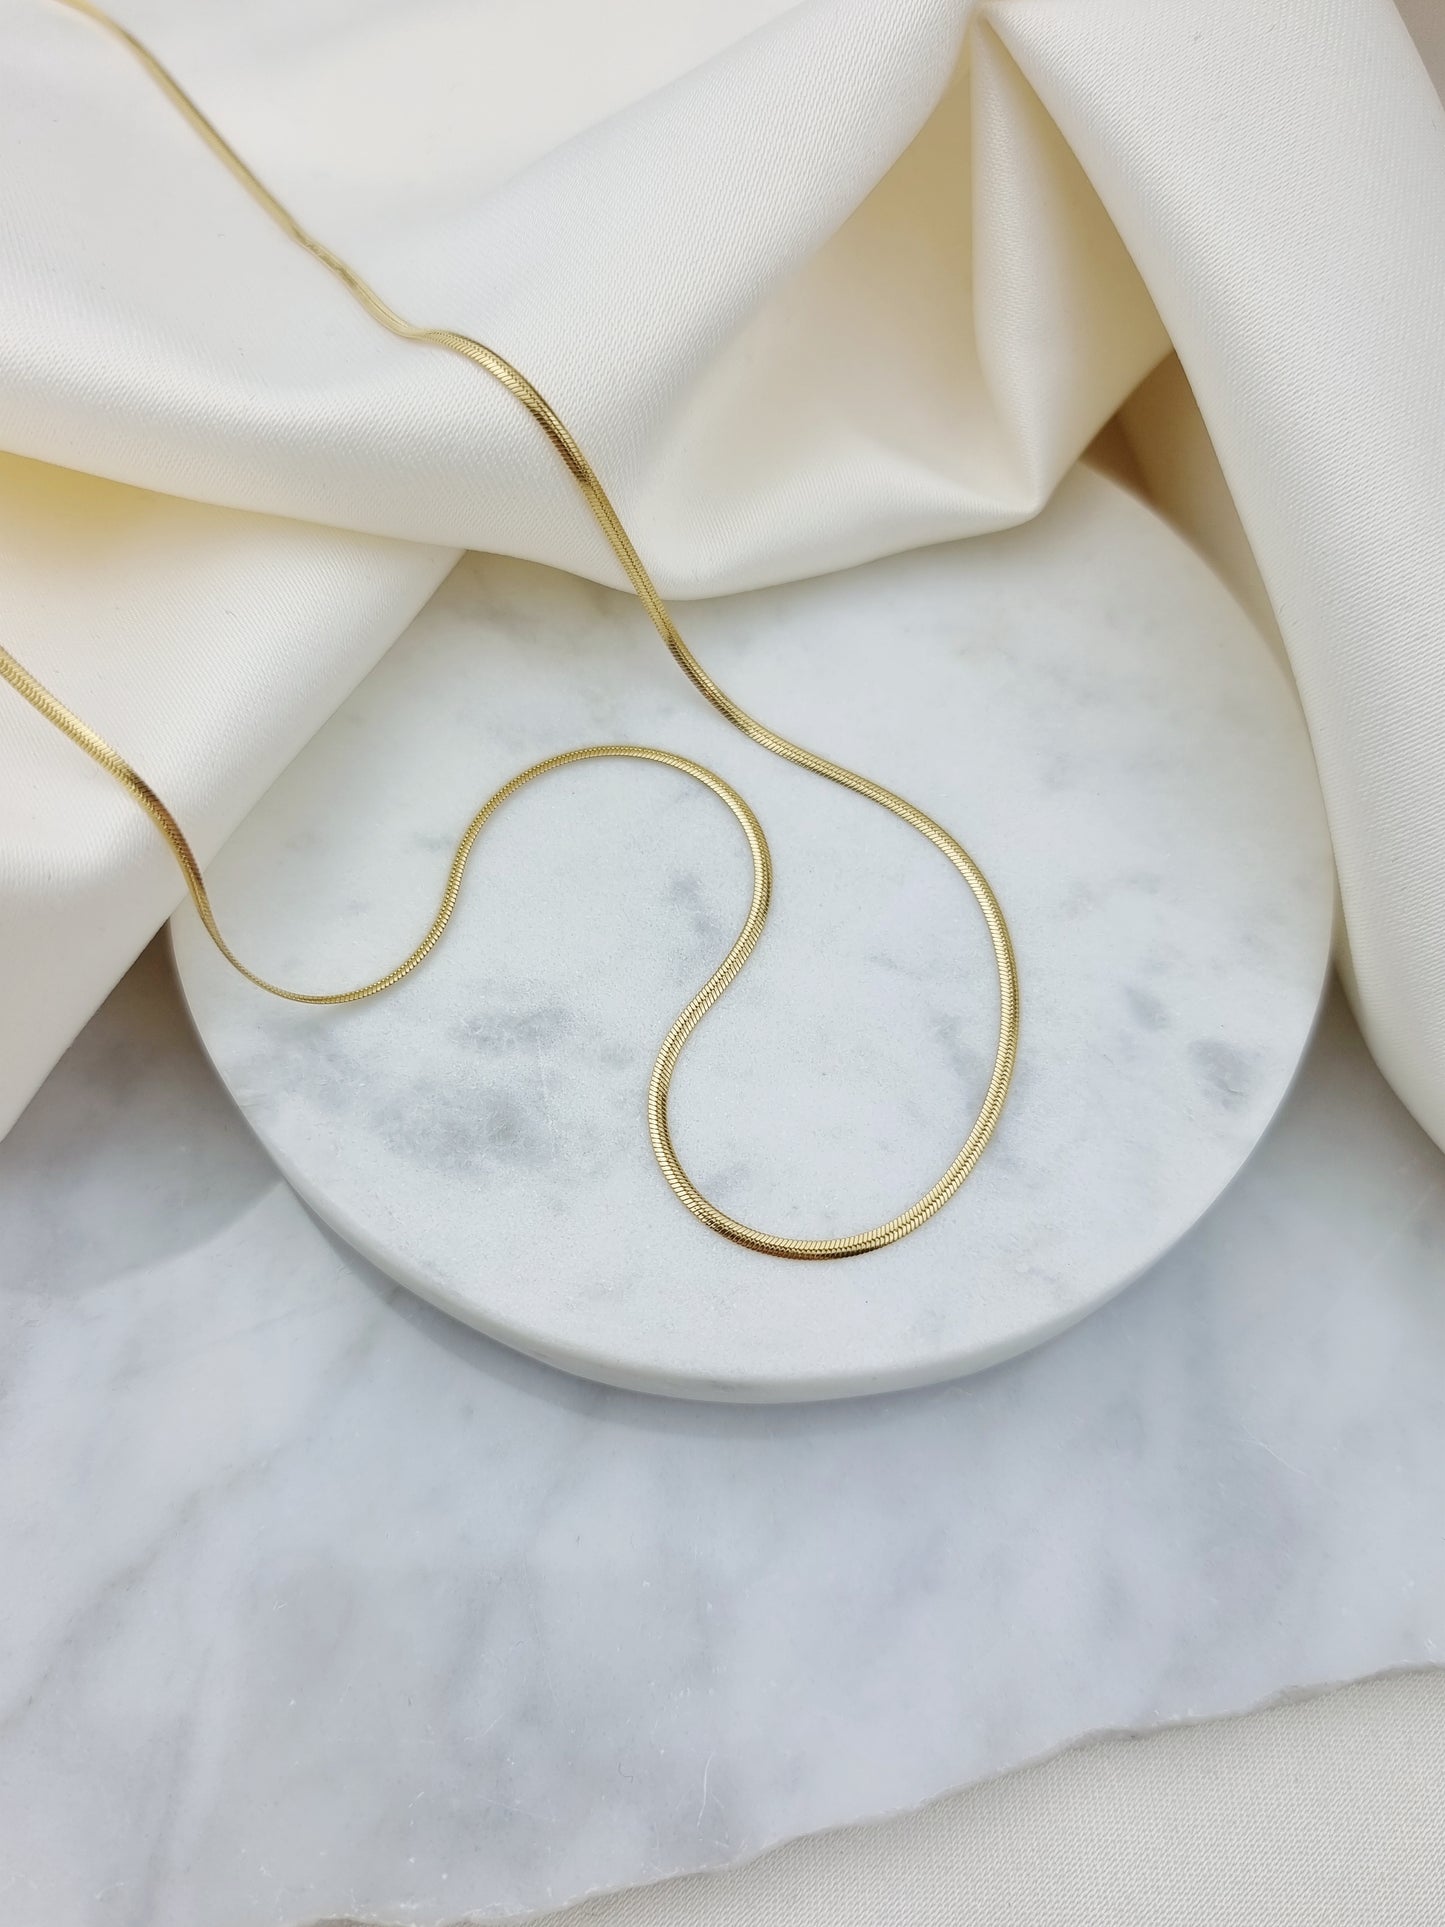 Super Tiny Herringbone Necklace 1mm